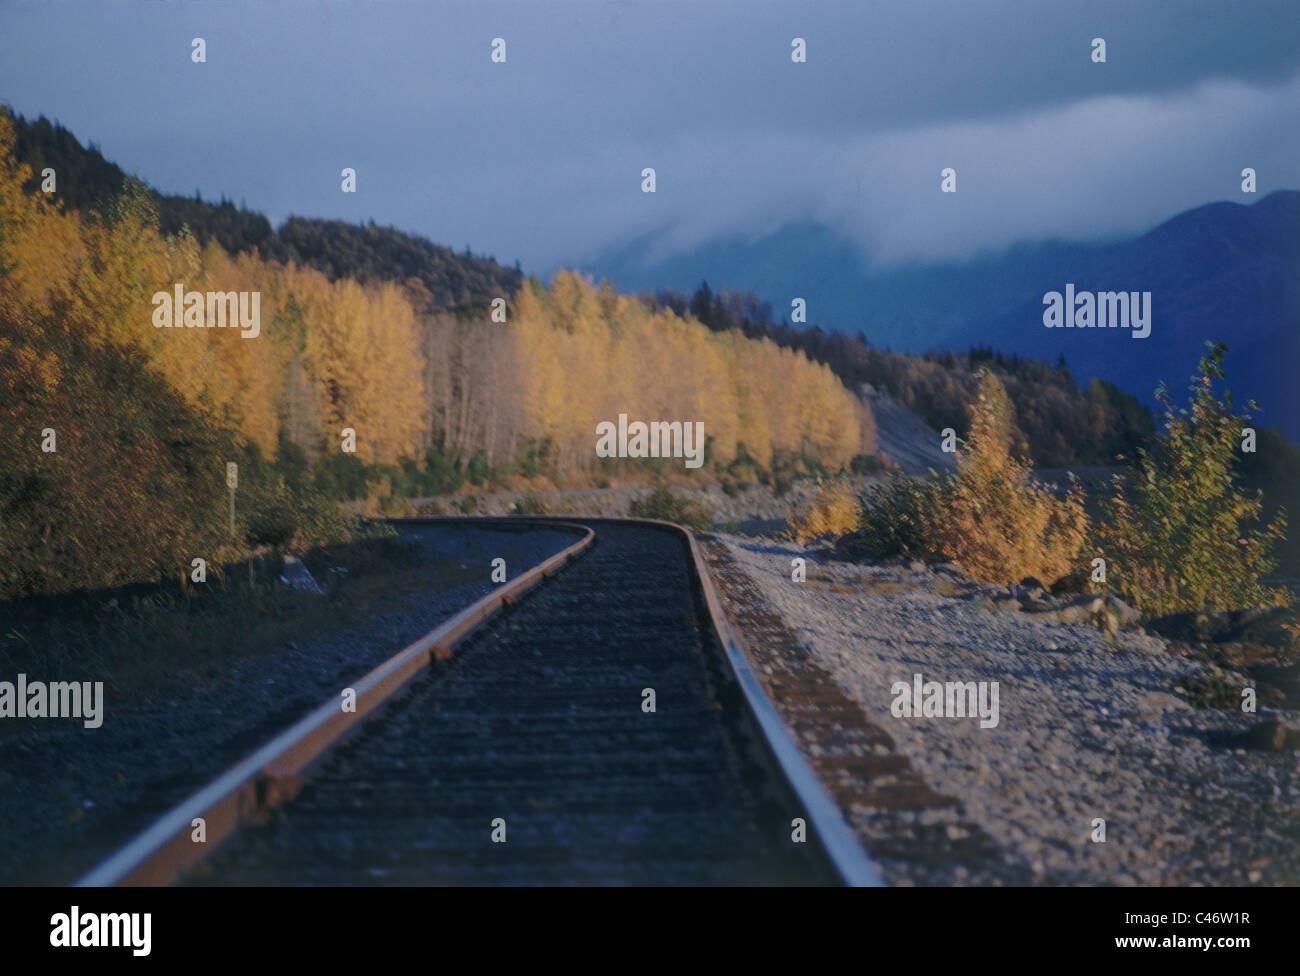 Photograph of the railways of Alaska Stock Photo